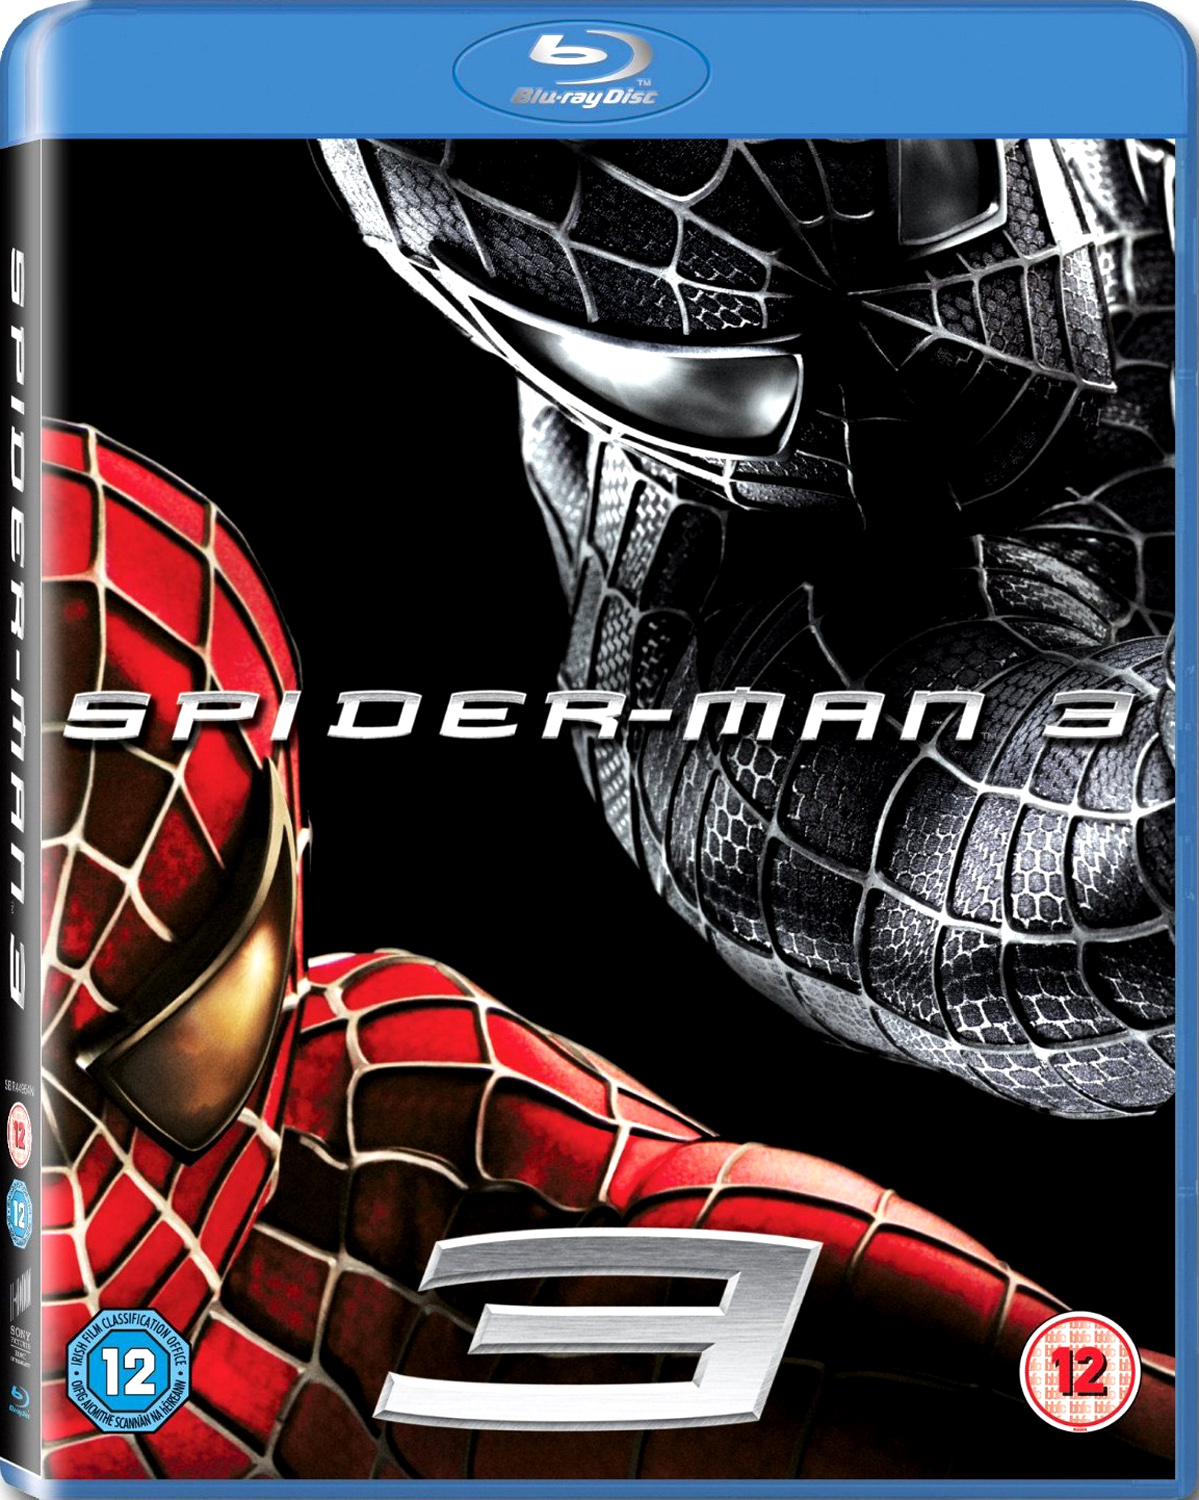 [蜘蛛侠3].Spider-Man.3.2007.US.BluRay.1080p.AVC.TrueHD.5.1-moto@CHDBits[45.75G]-3.jpg